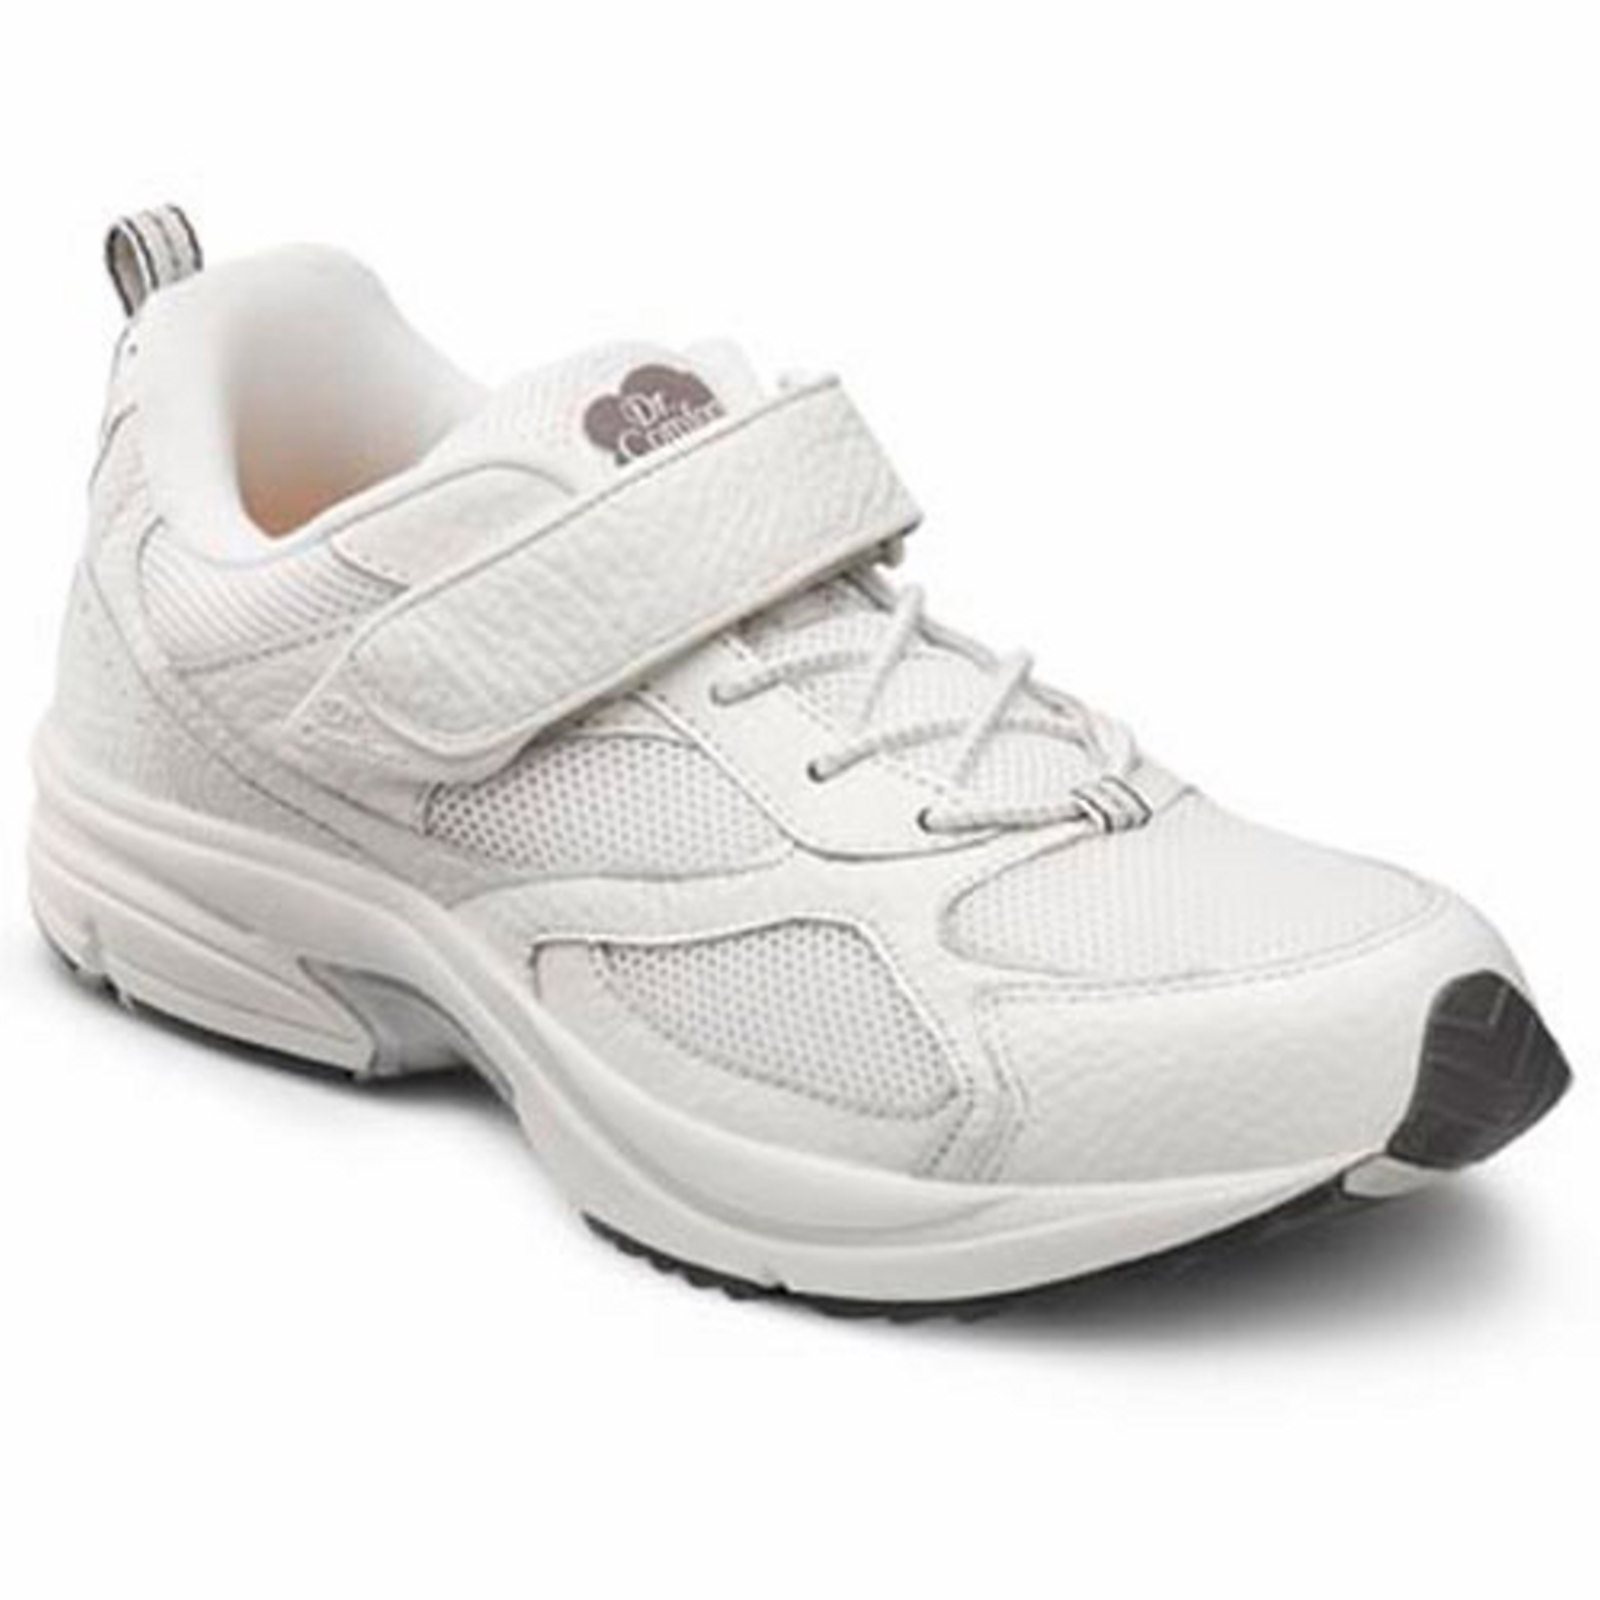 Dr. Comfort Endurance Men's Athletic Shoe: 11.5 Wide (E/2E) White Elastic Lace w/Strap - image 1 of 4